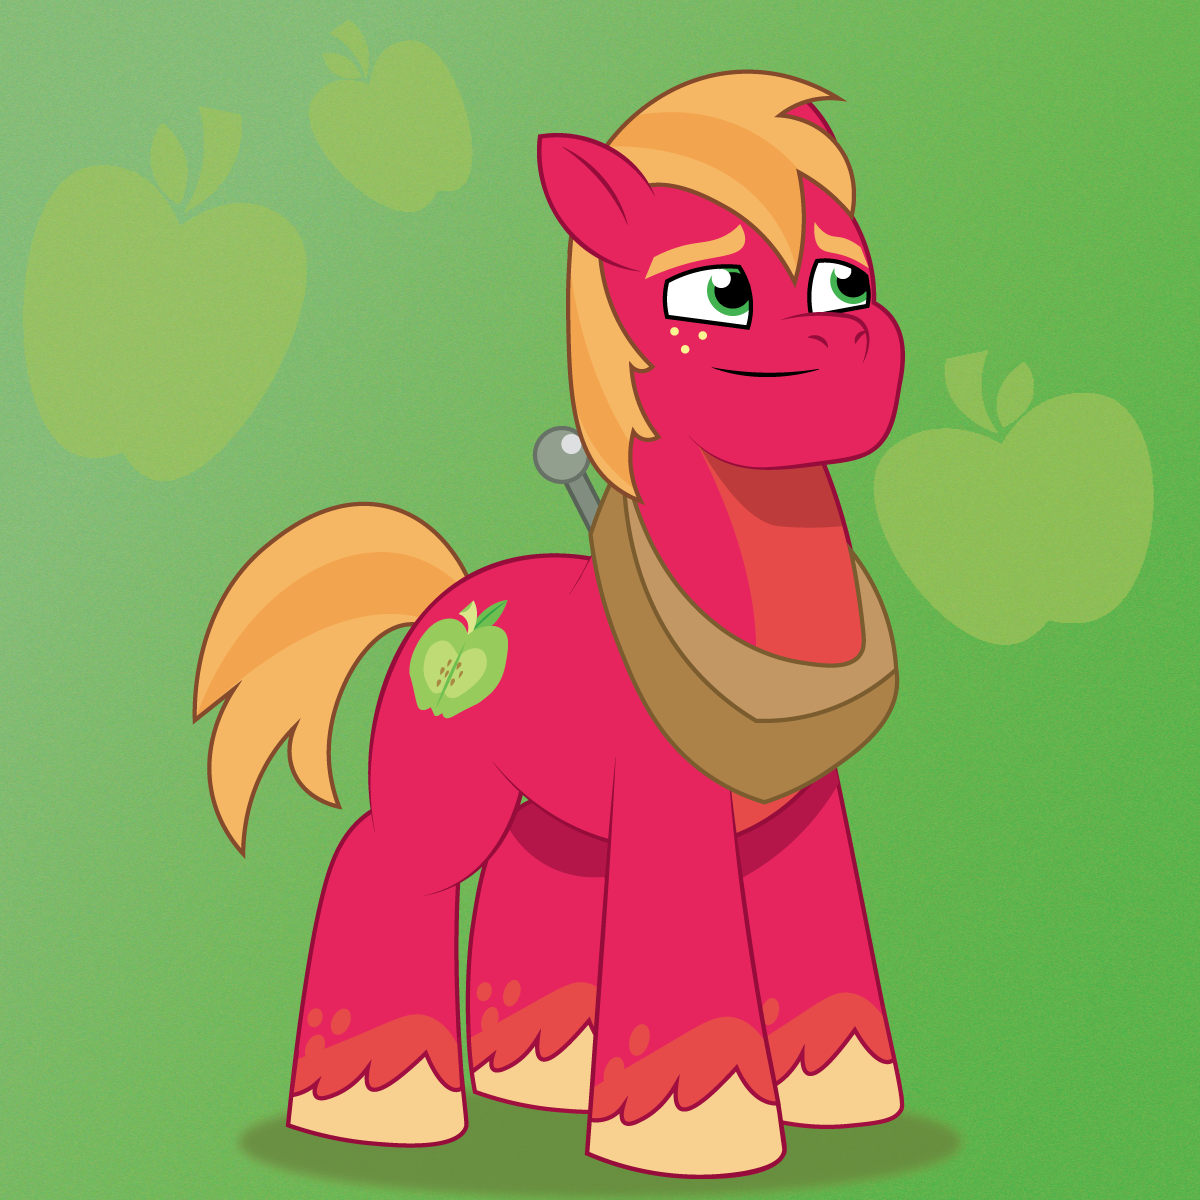 My Little Pony: Equestria Girls (web series) - Wikipedia